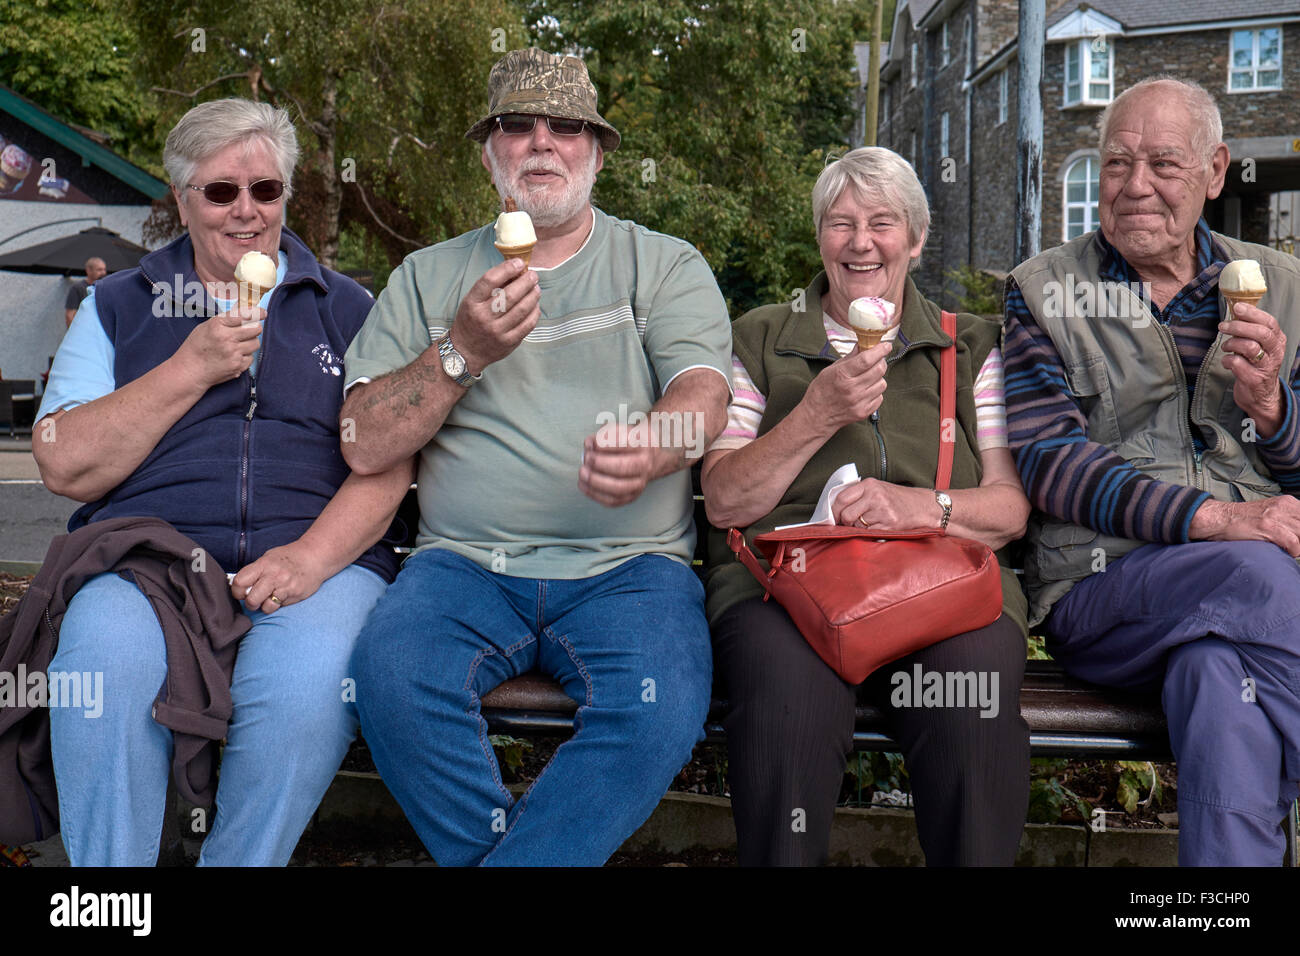 Eating ice cream. Senior people enjoying an ice cream on a days outing. Cumbria England UK Stock Photo